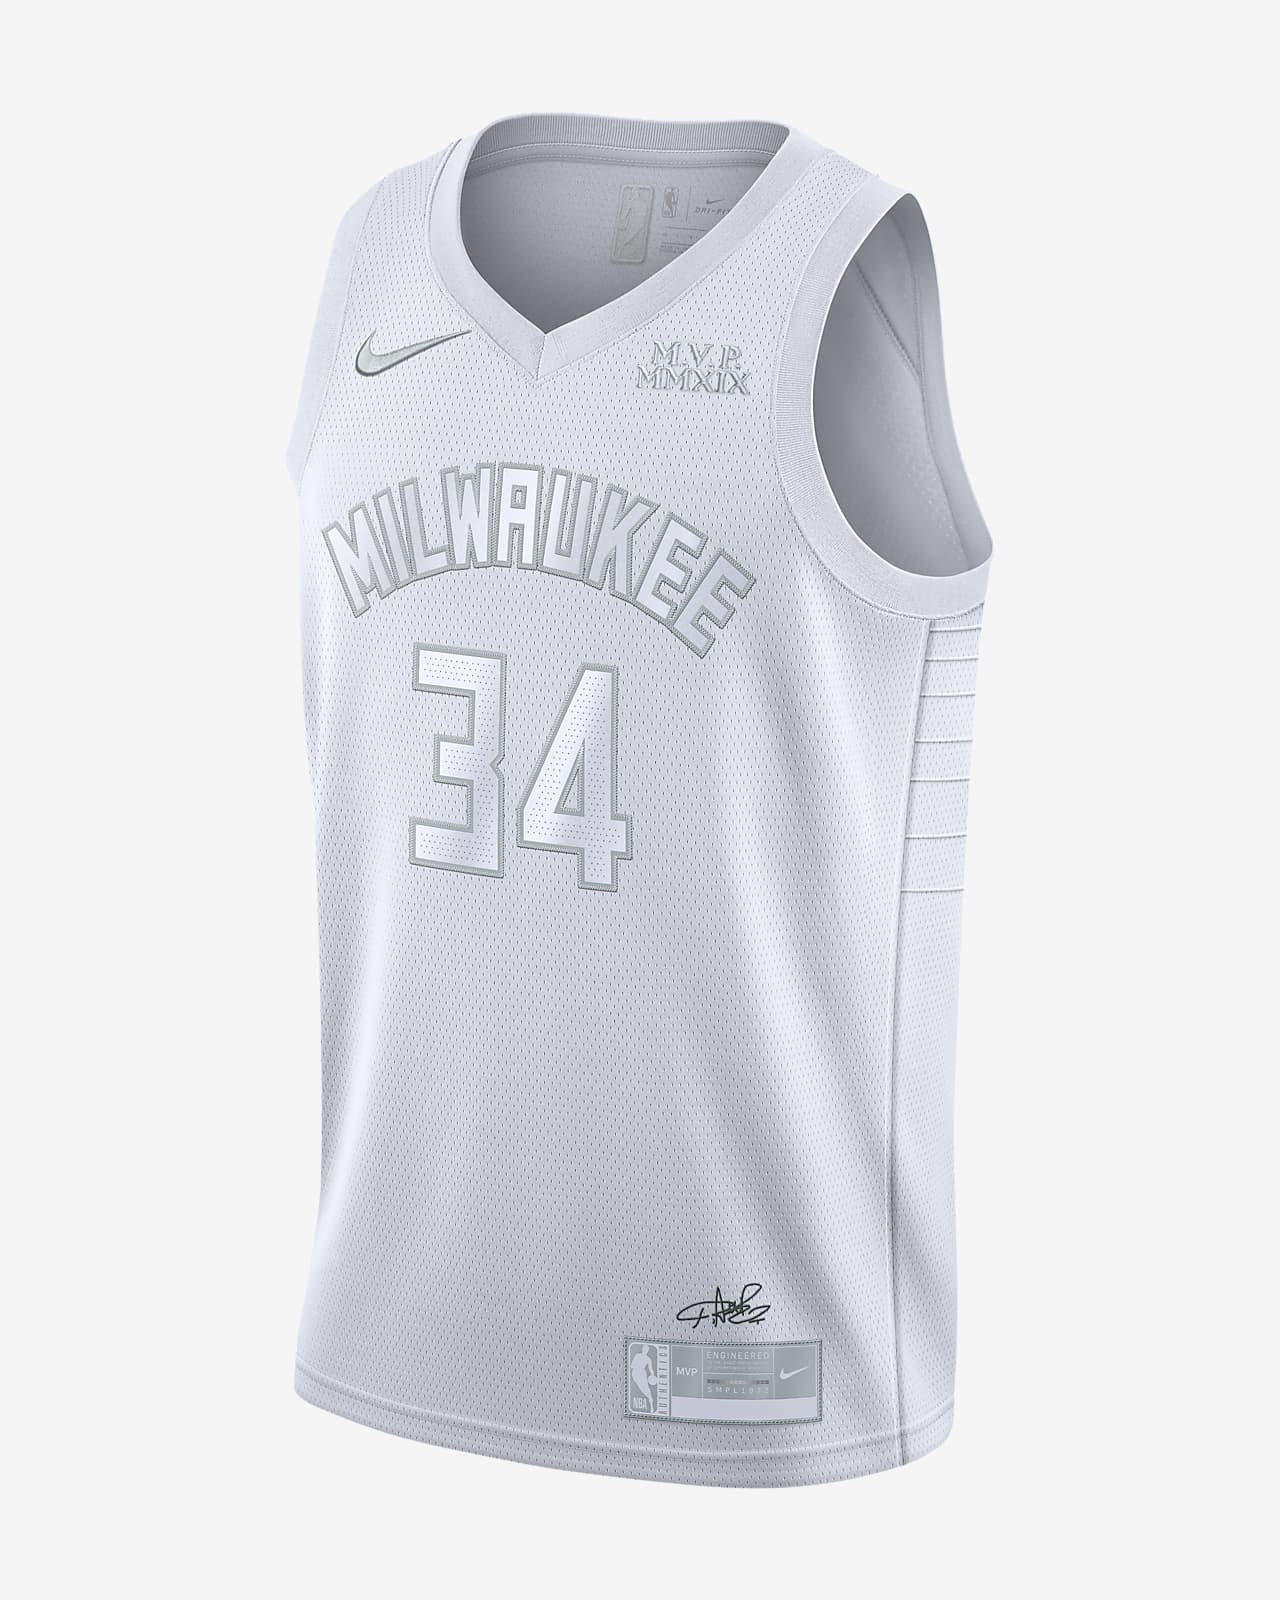 Camiseta Nike NBA para hombre Giannis Antetokounmpo Bucks MVP. Nike MX